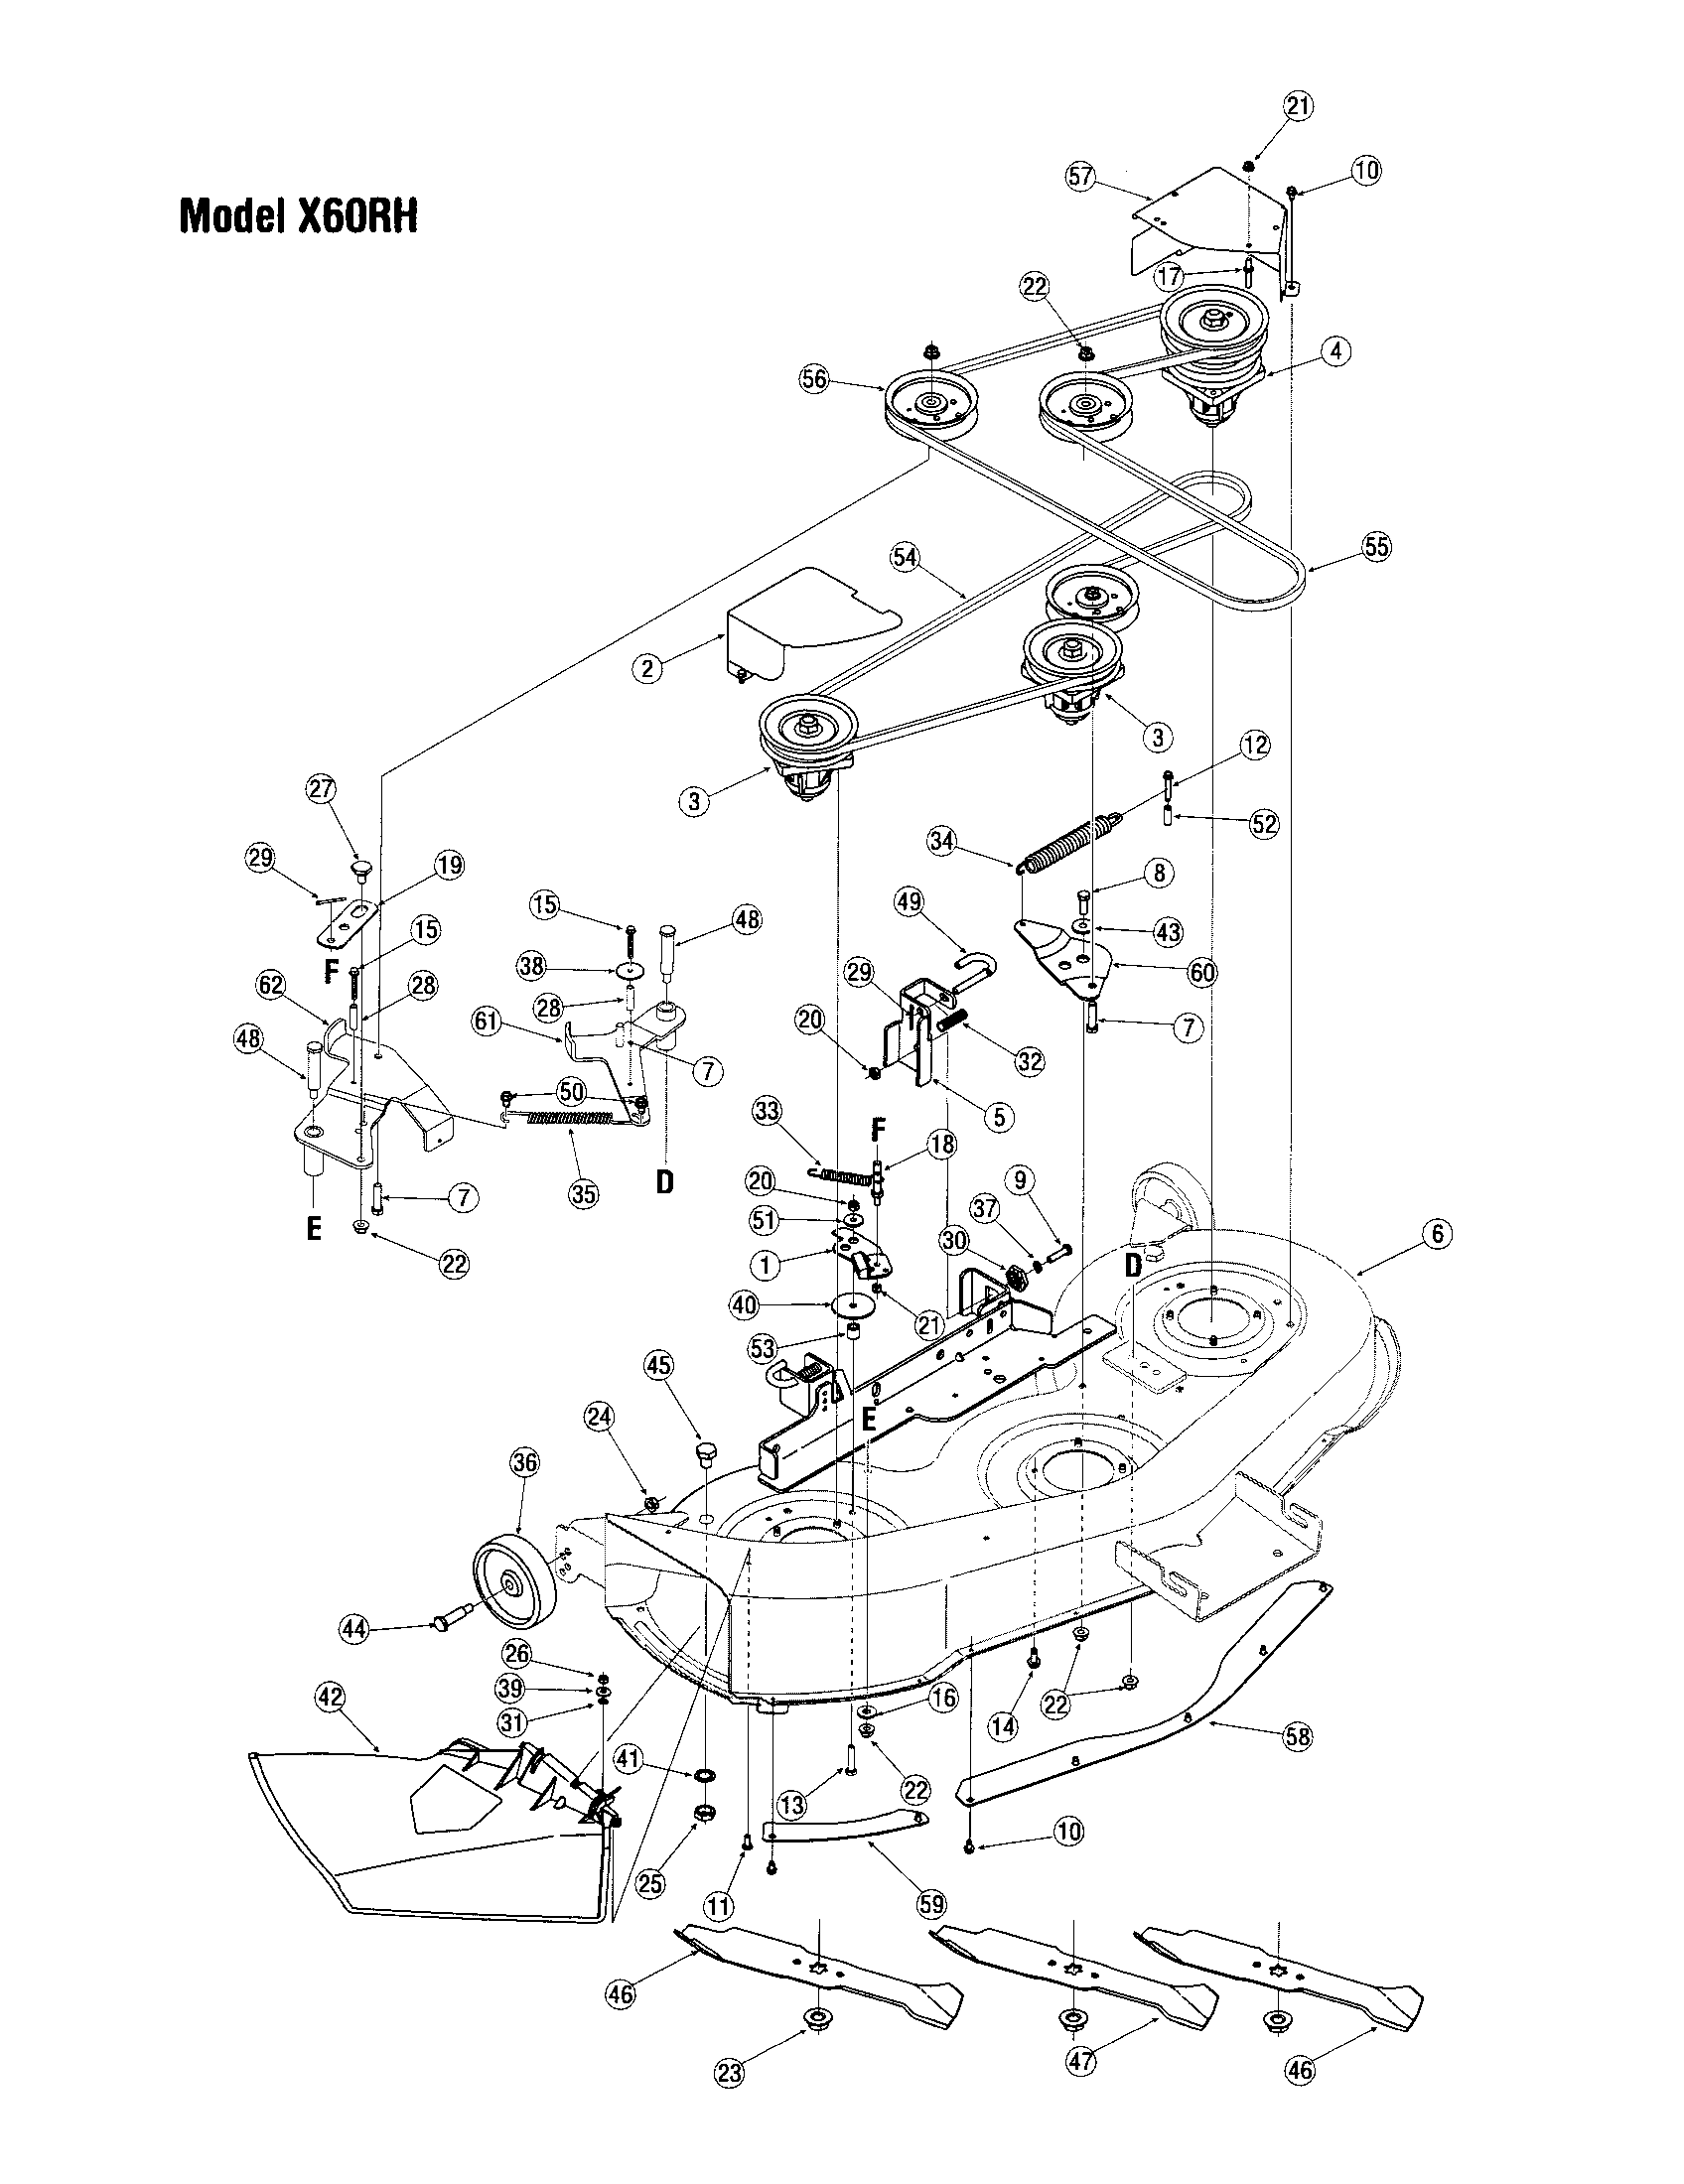 Toro Lx500 Drive Belt Diagram - Drivenheisenberg toro lawn mower magneto wiring diagram 